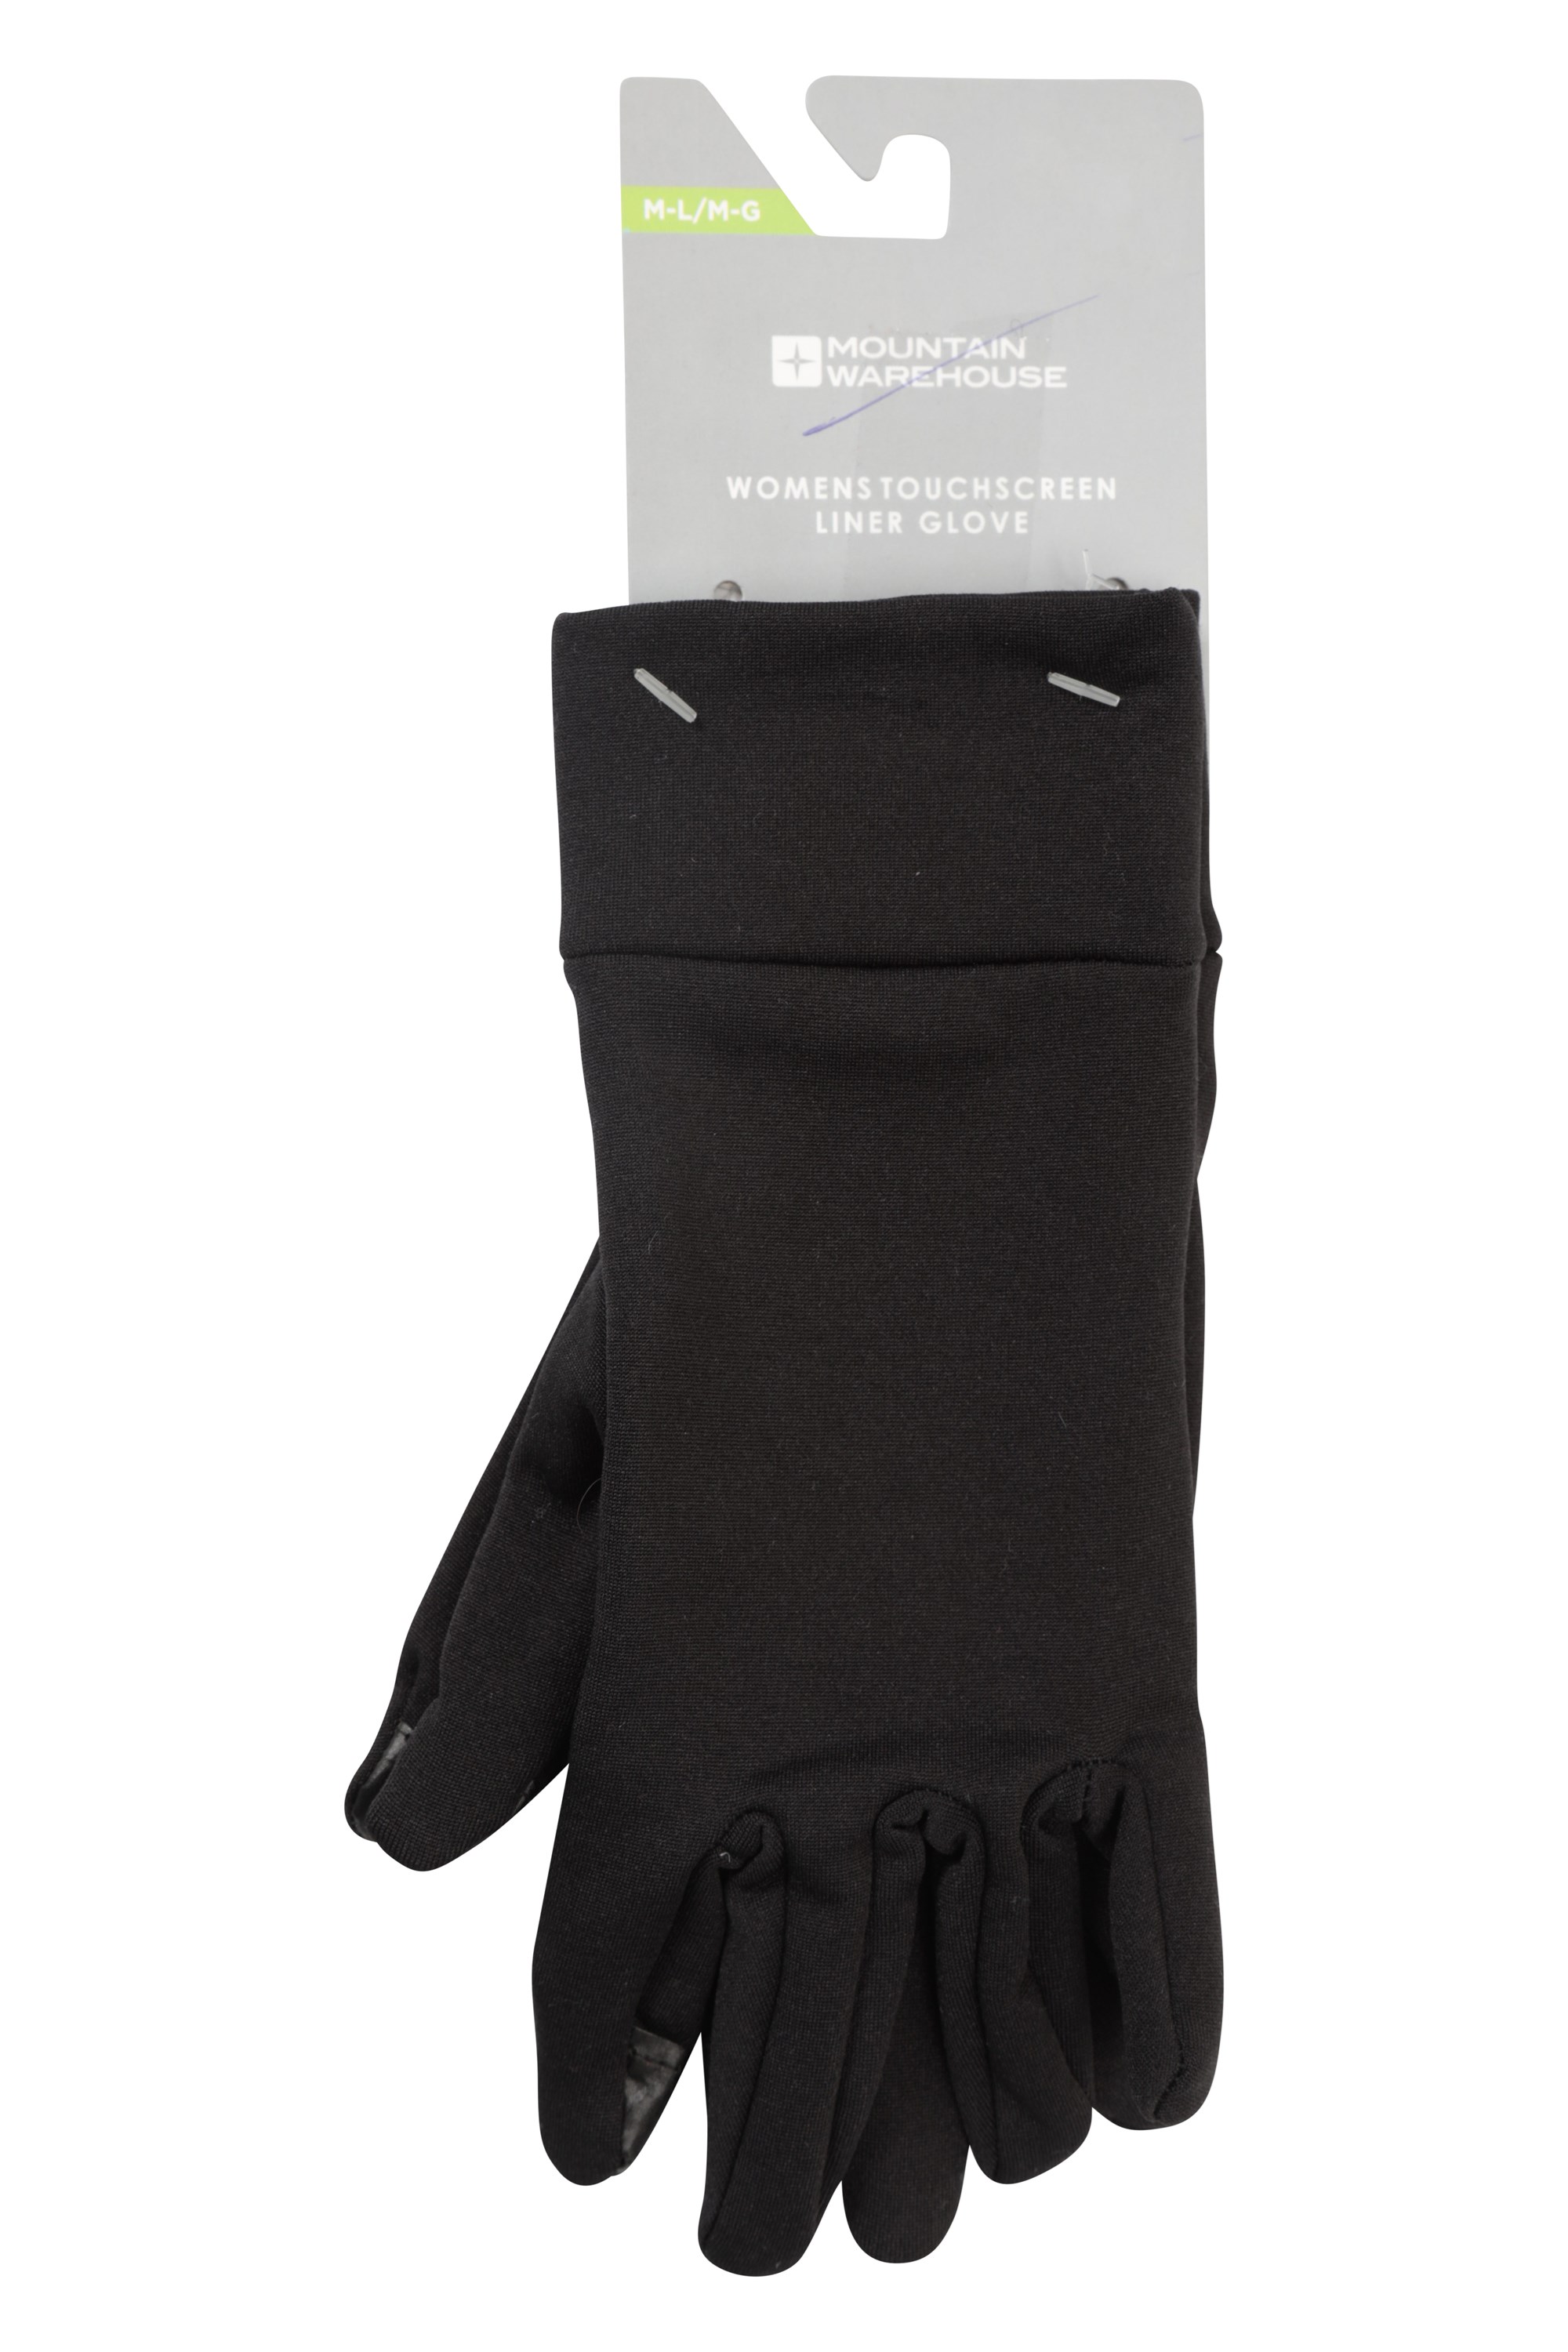 Mountain Warehouse Wms Touchscreen Womens Liner Gloves 